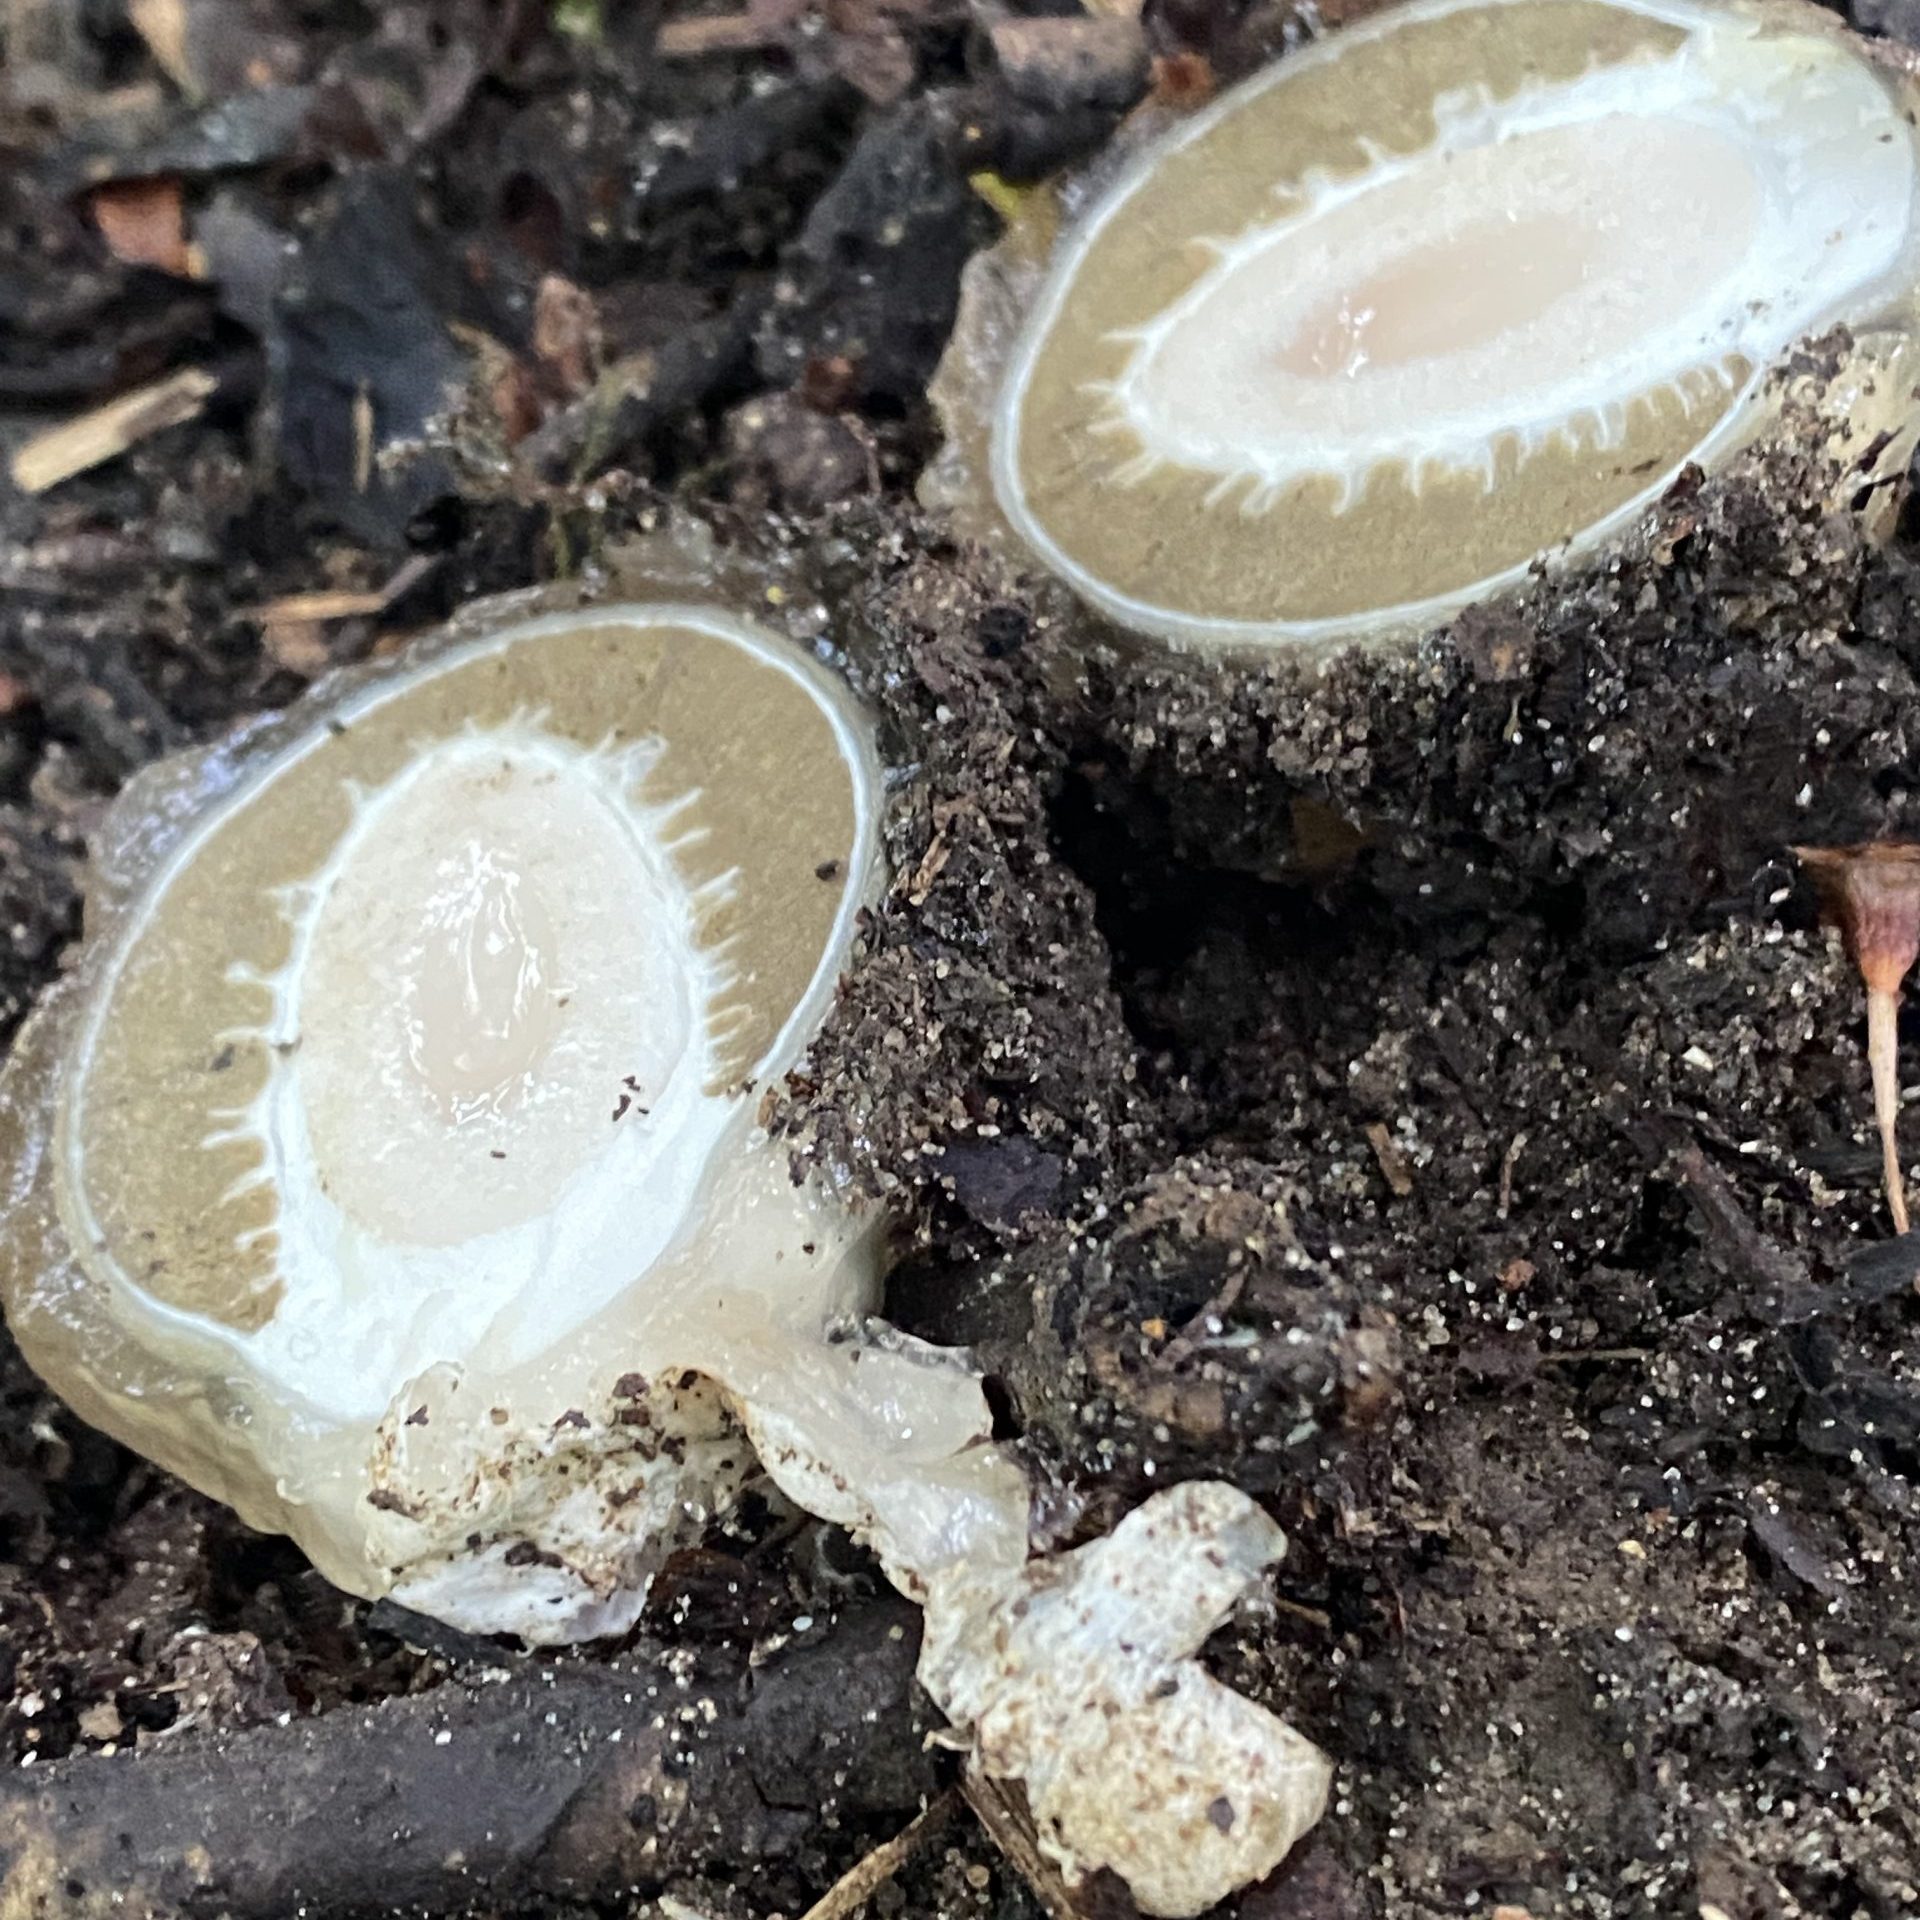 Witches Egg -> Stinkhorn mushroom (Phallus Impedicus)